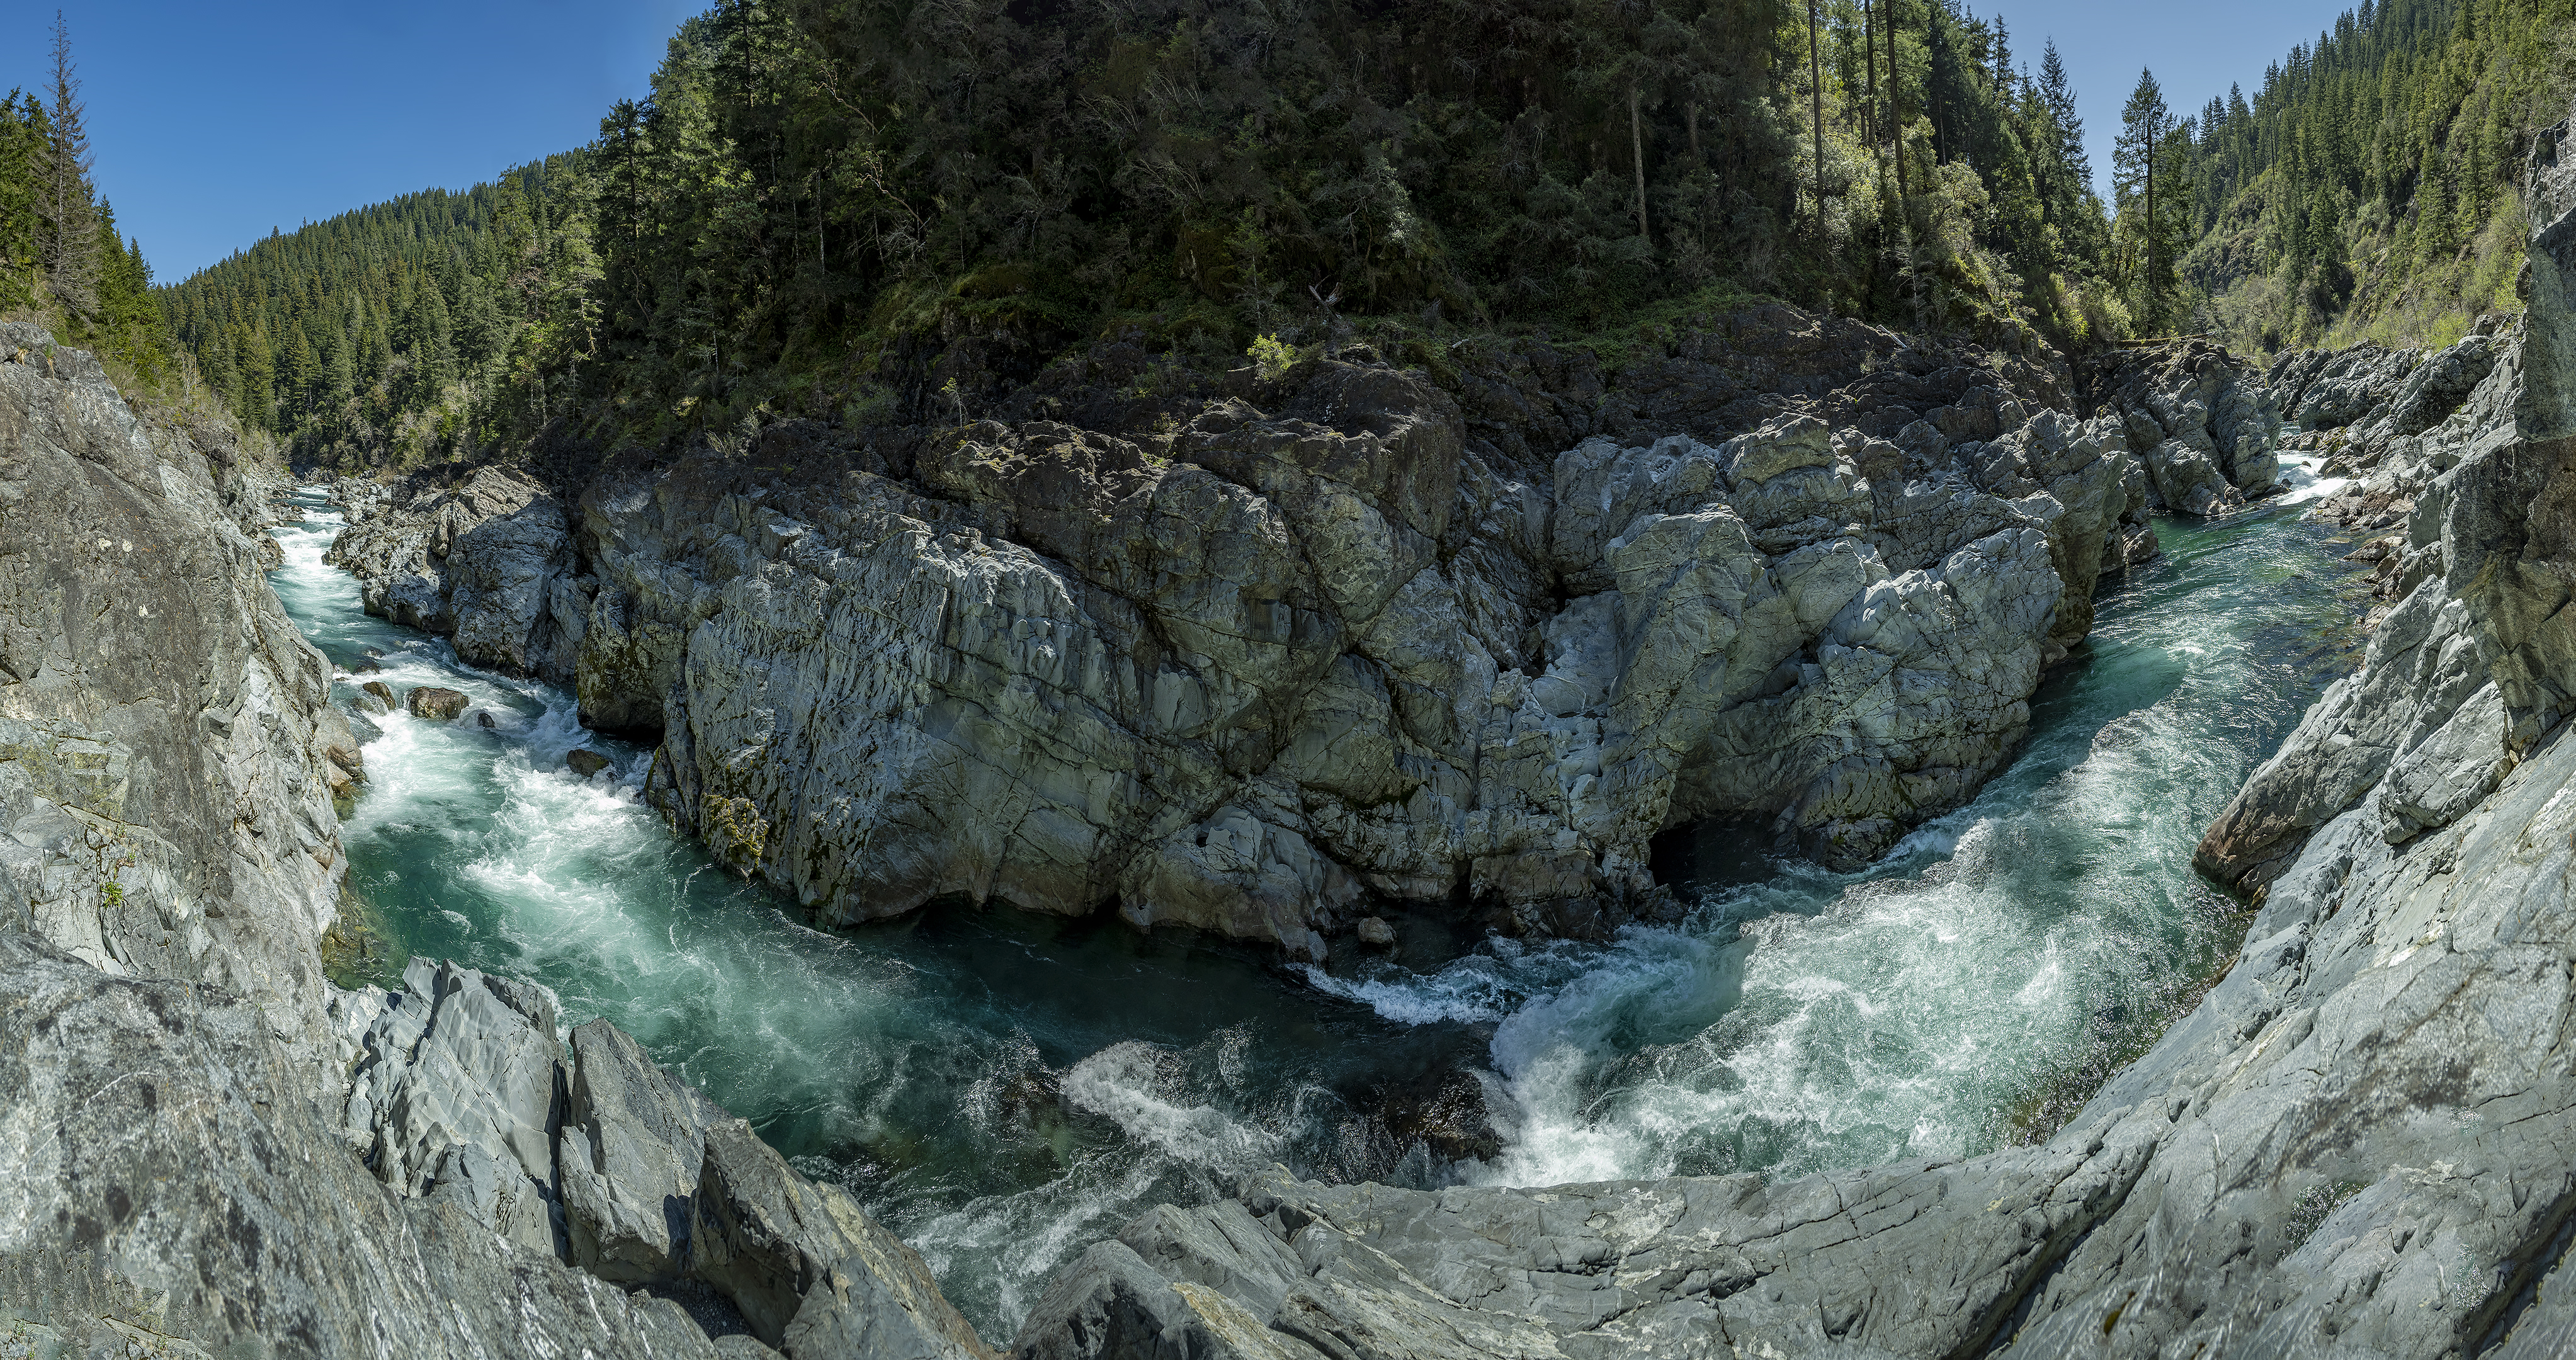 10-photo photomerge panorama smith river